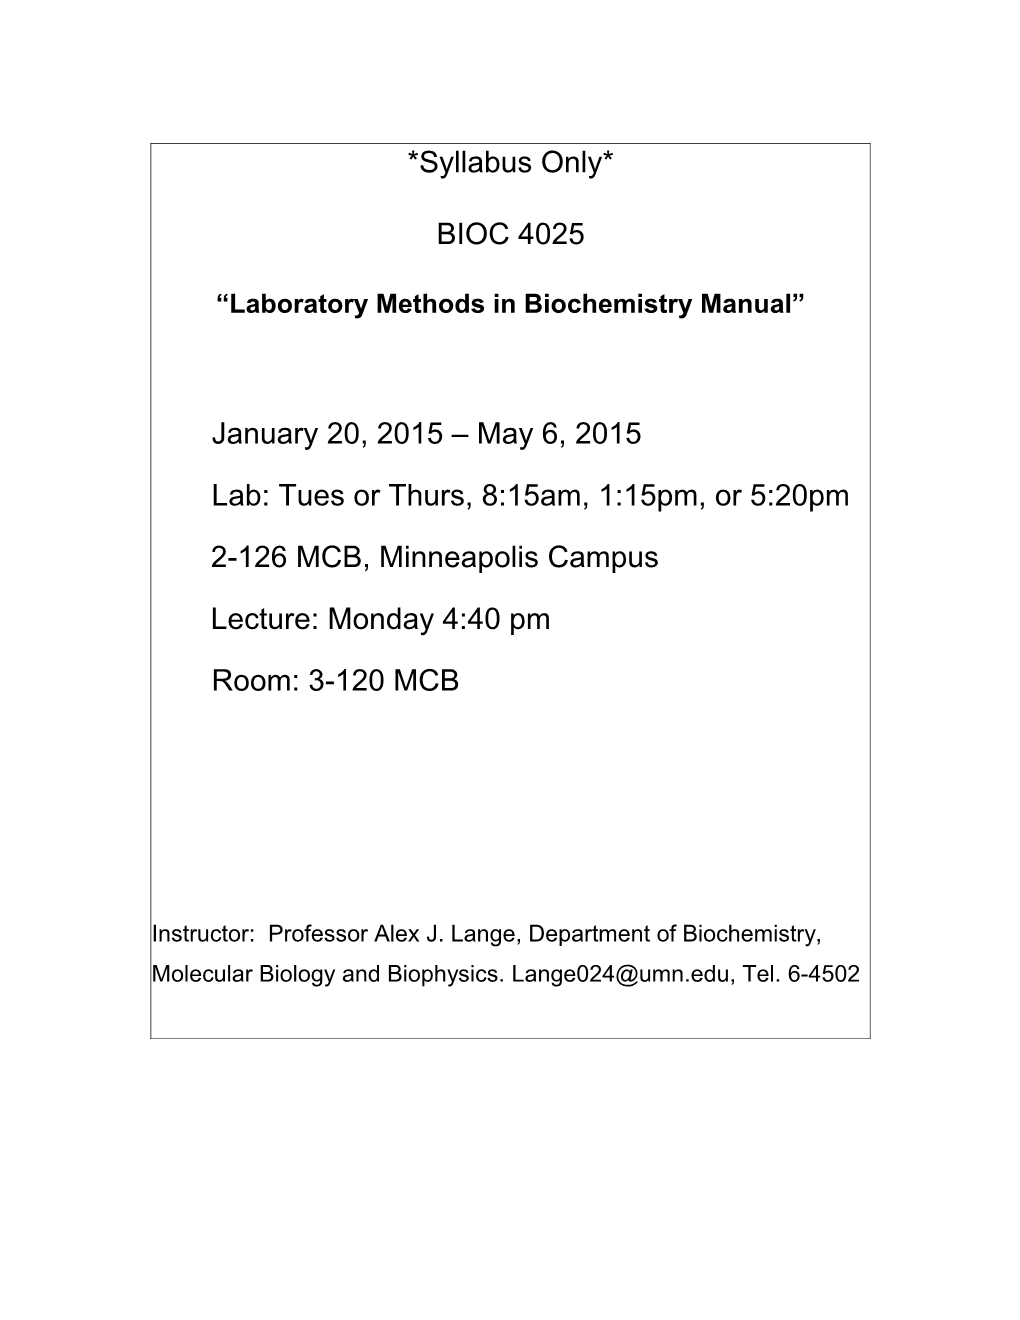 Laboratory Methods in Biochemistry Manual